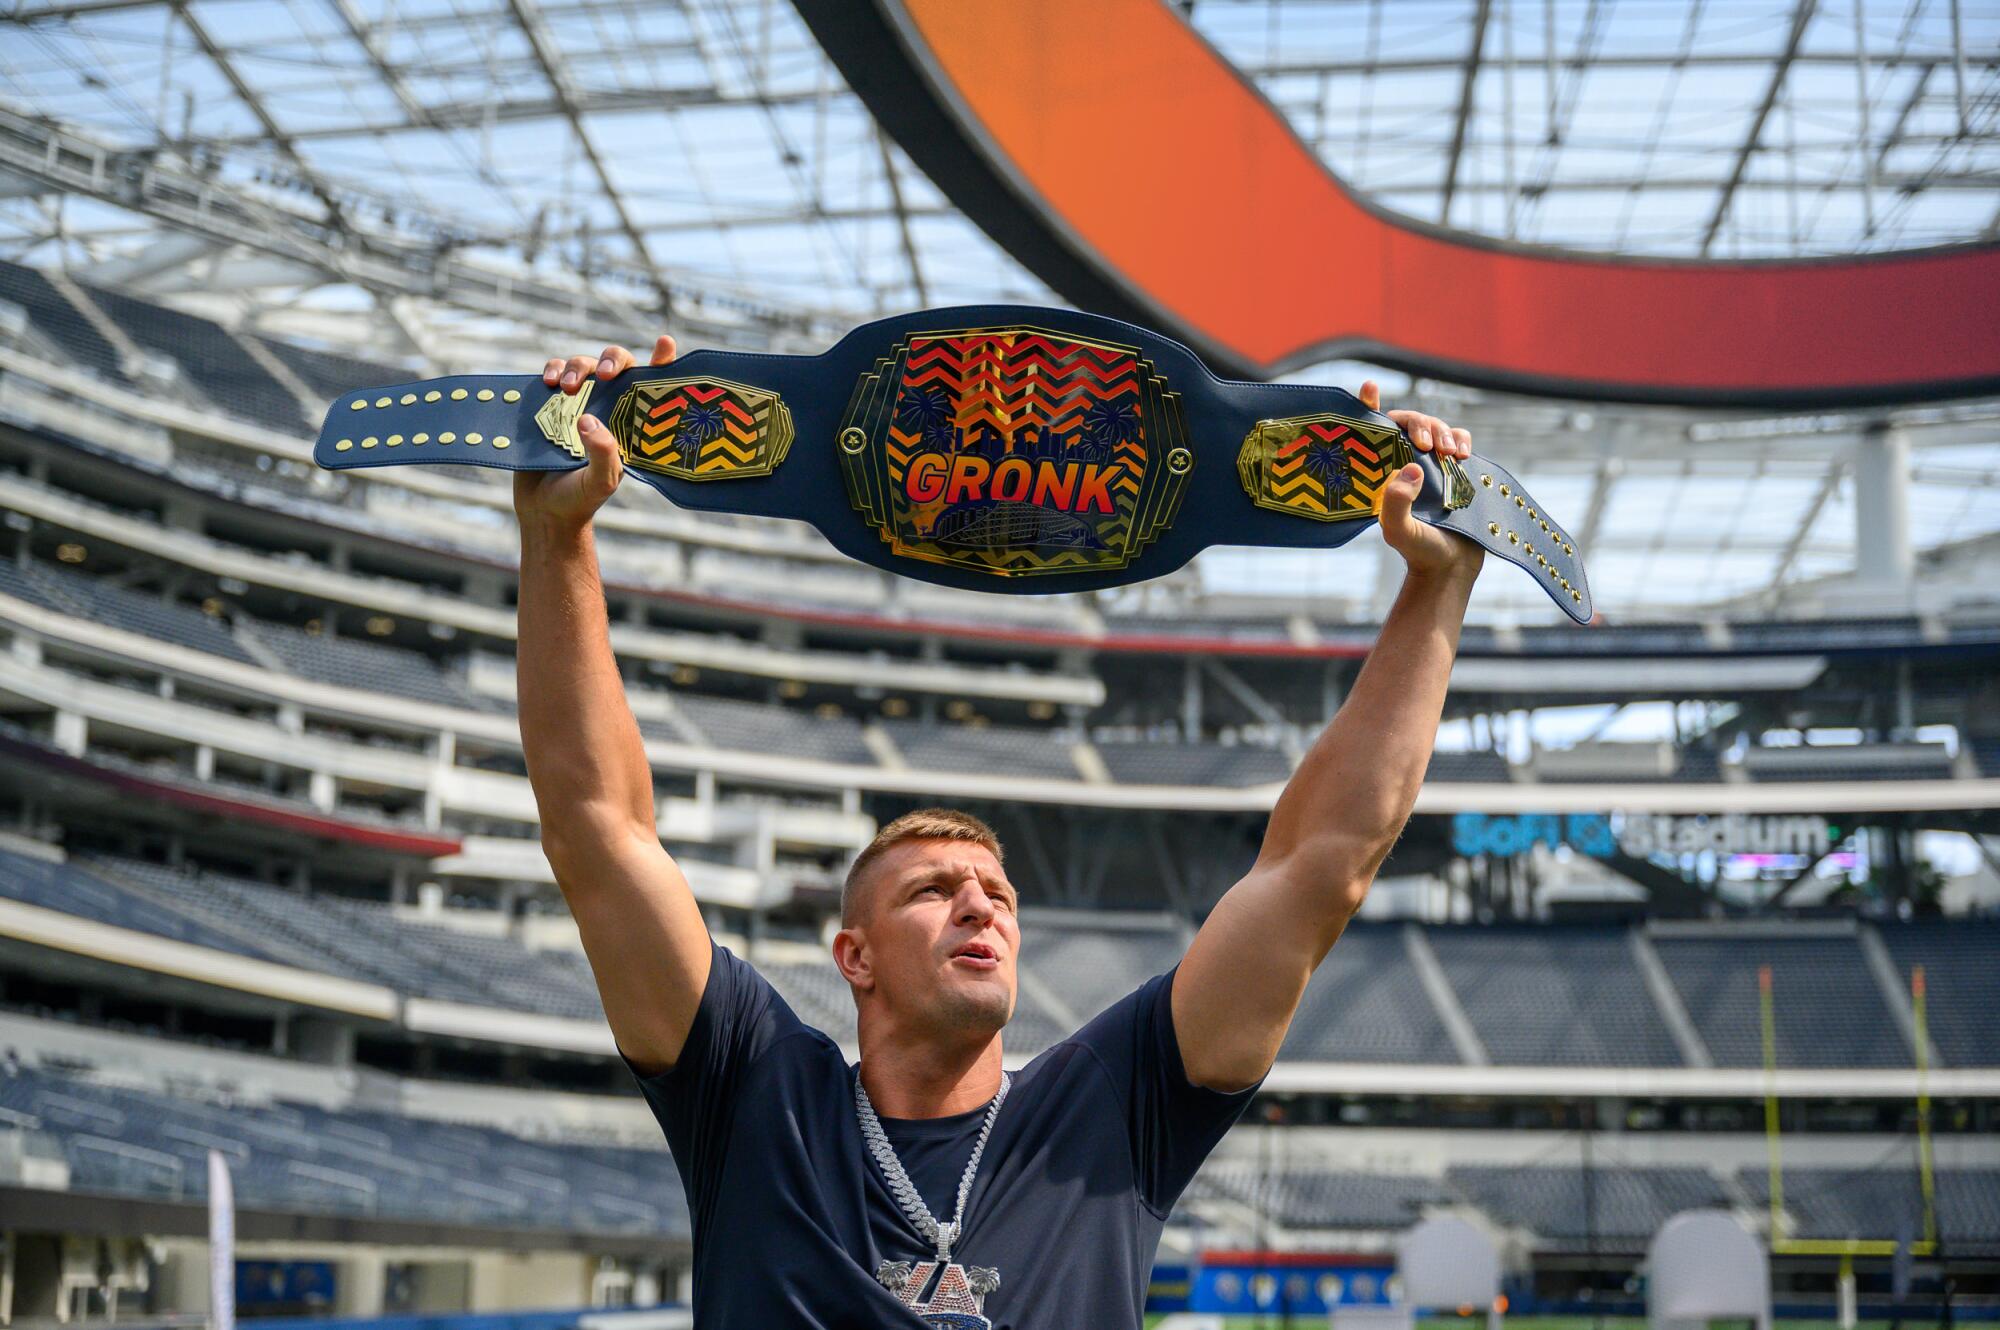 Former NFL cornerback Rob Gronkowski holds a championship belt at SoFi Stadium.